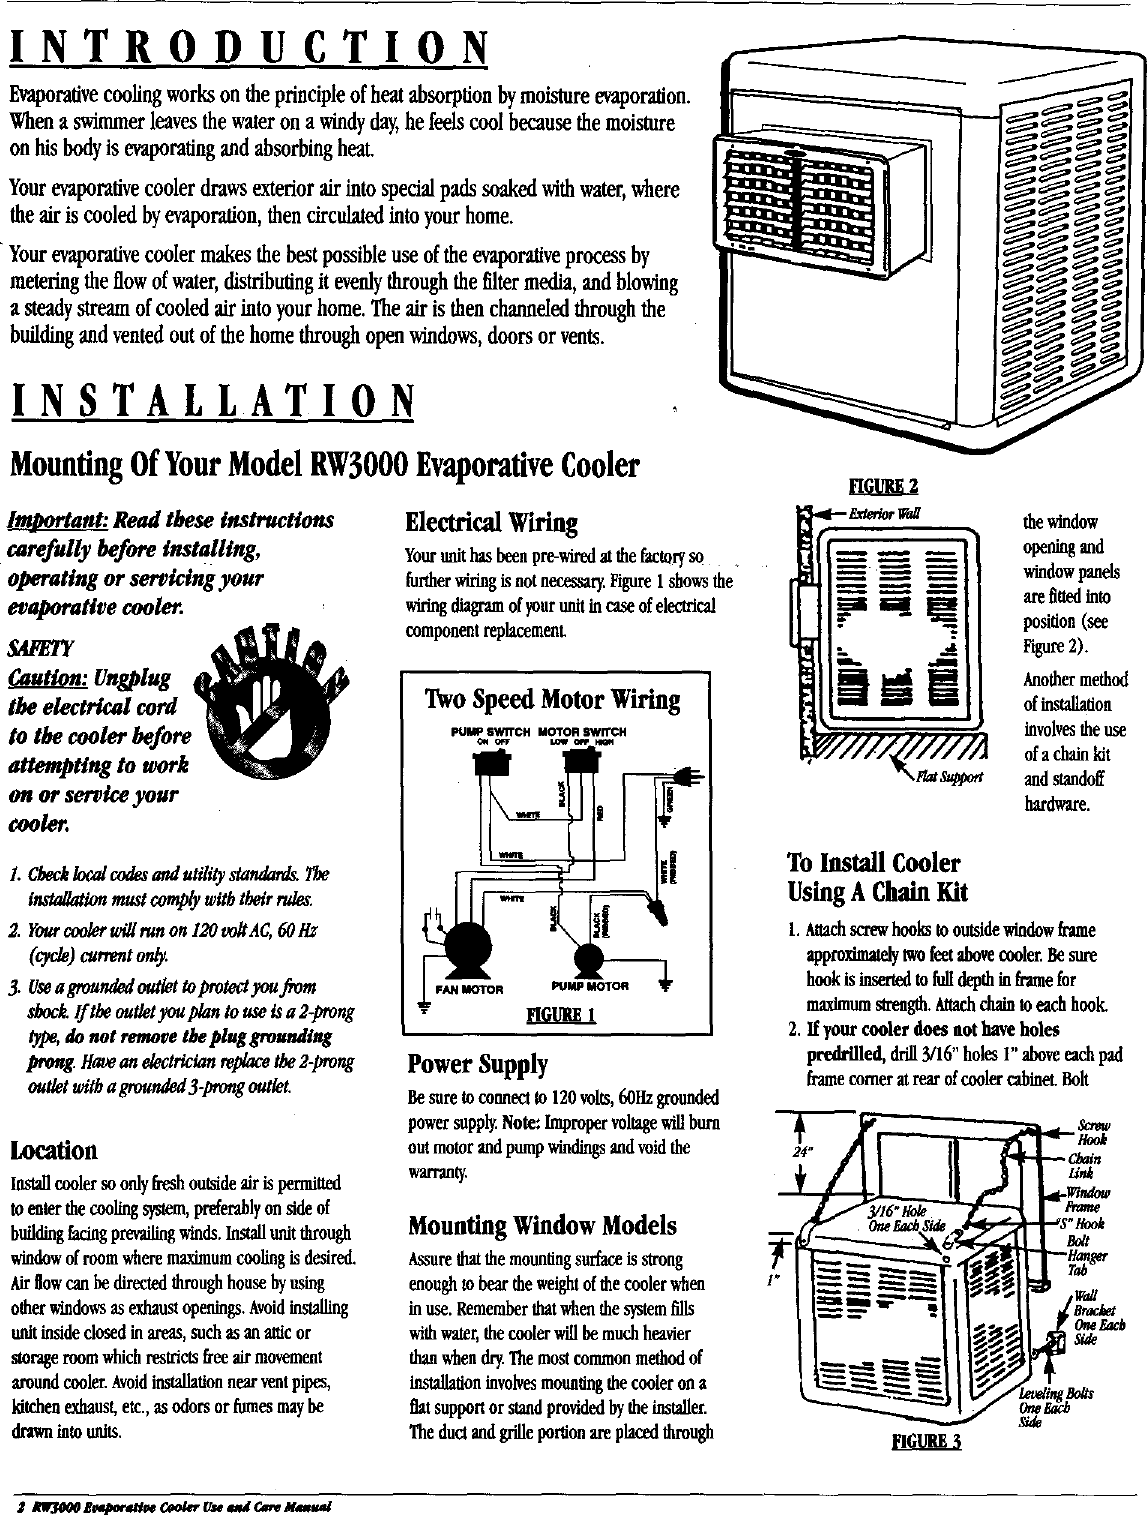 Page 2 of 4 - ADOBEAIR  Evaporative Cooler Manual L9070131